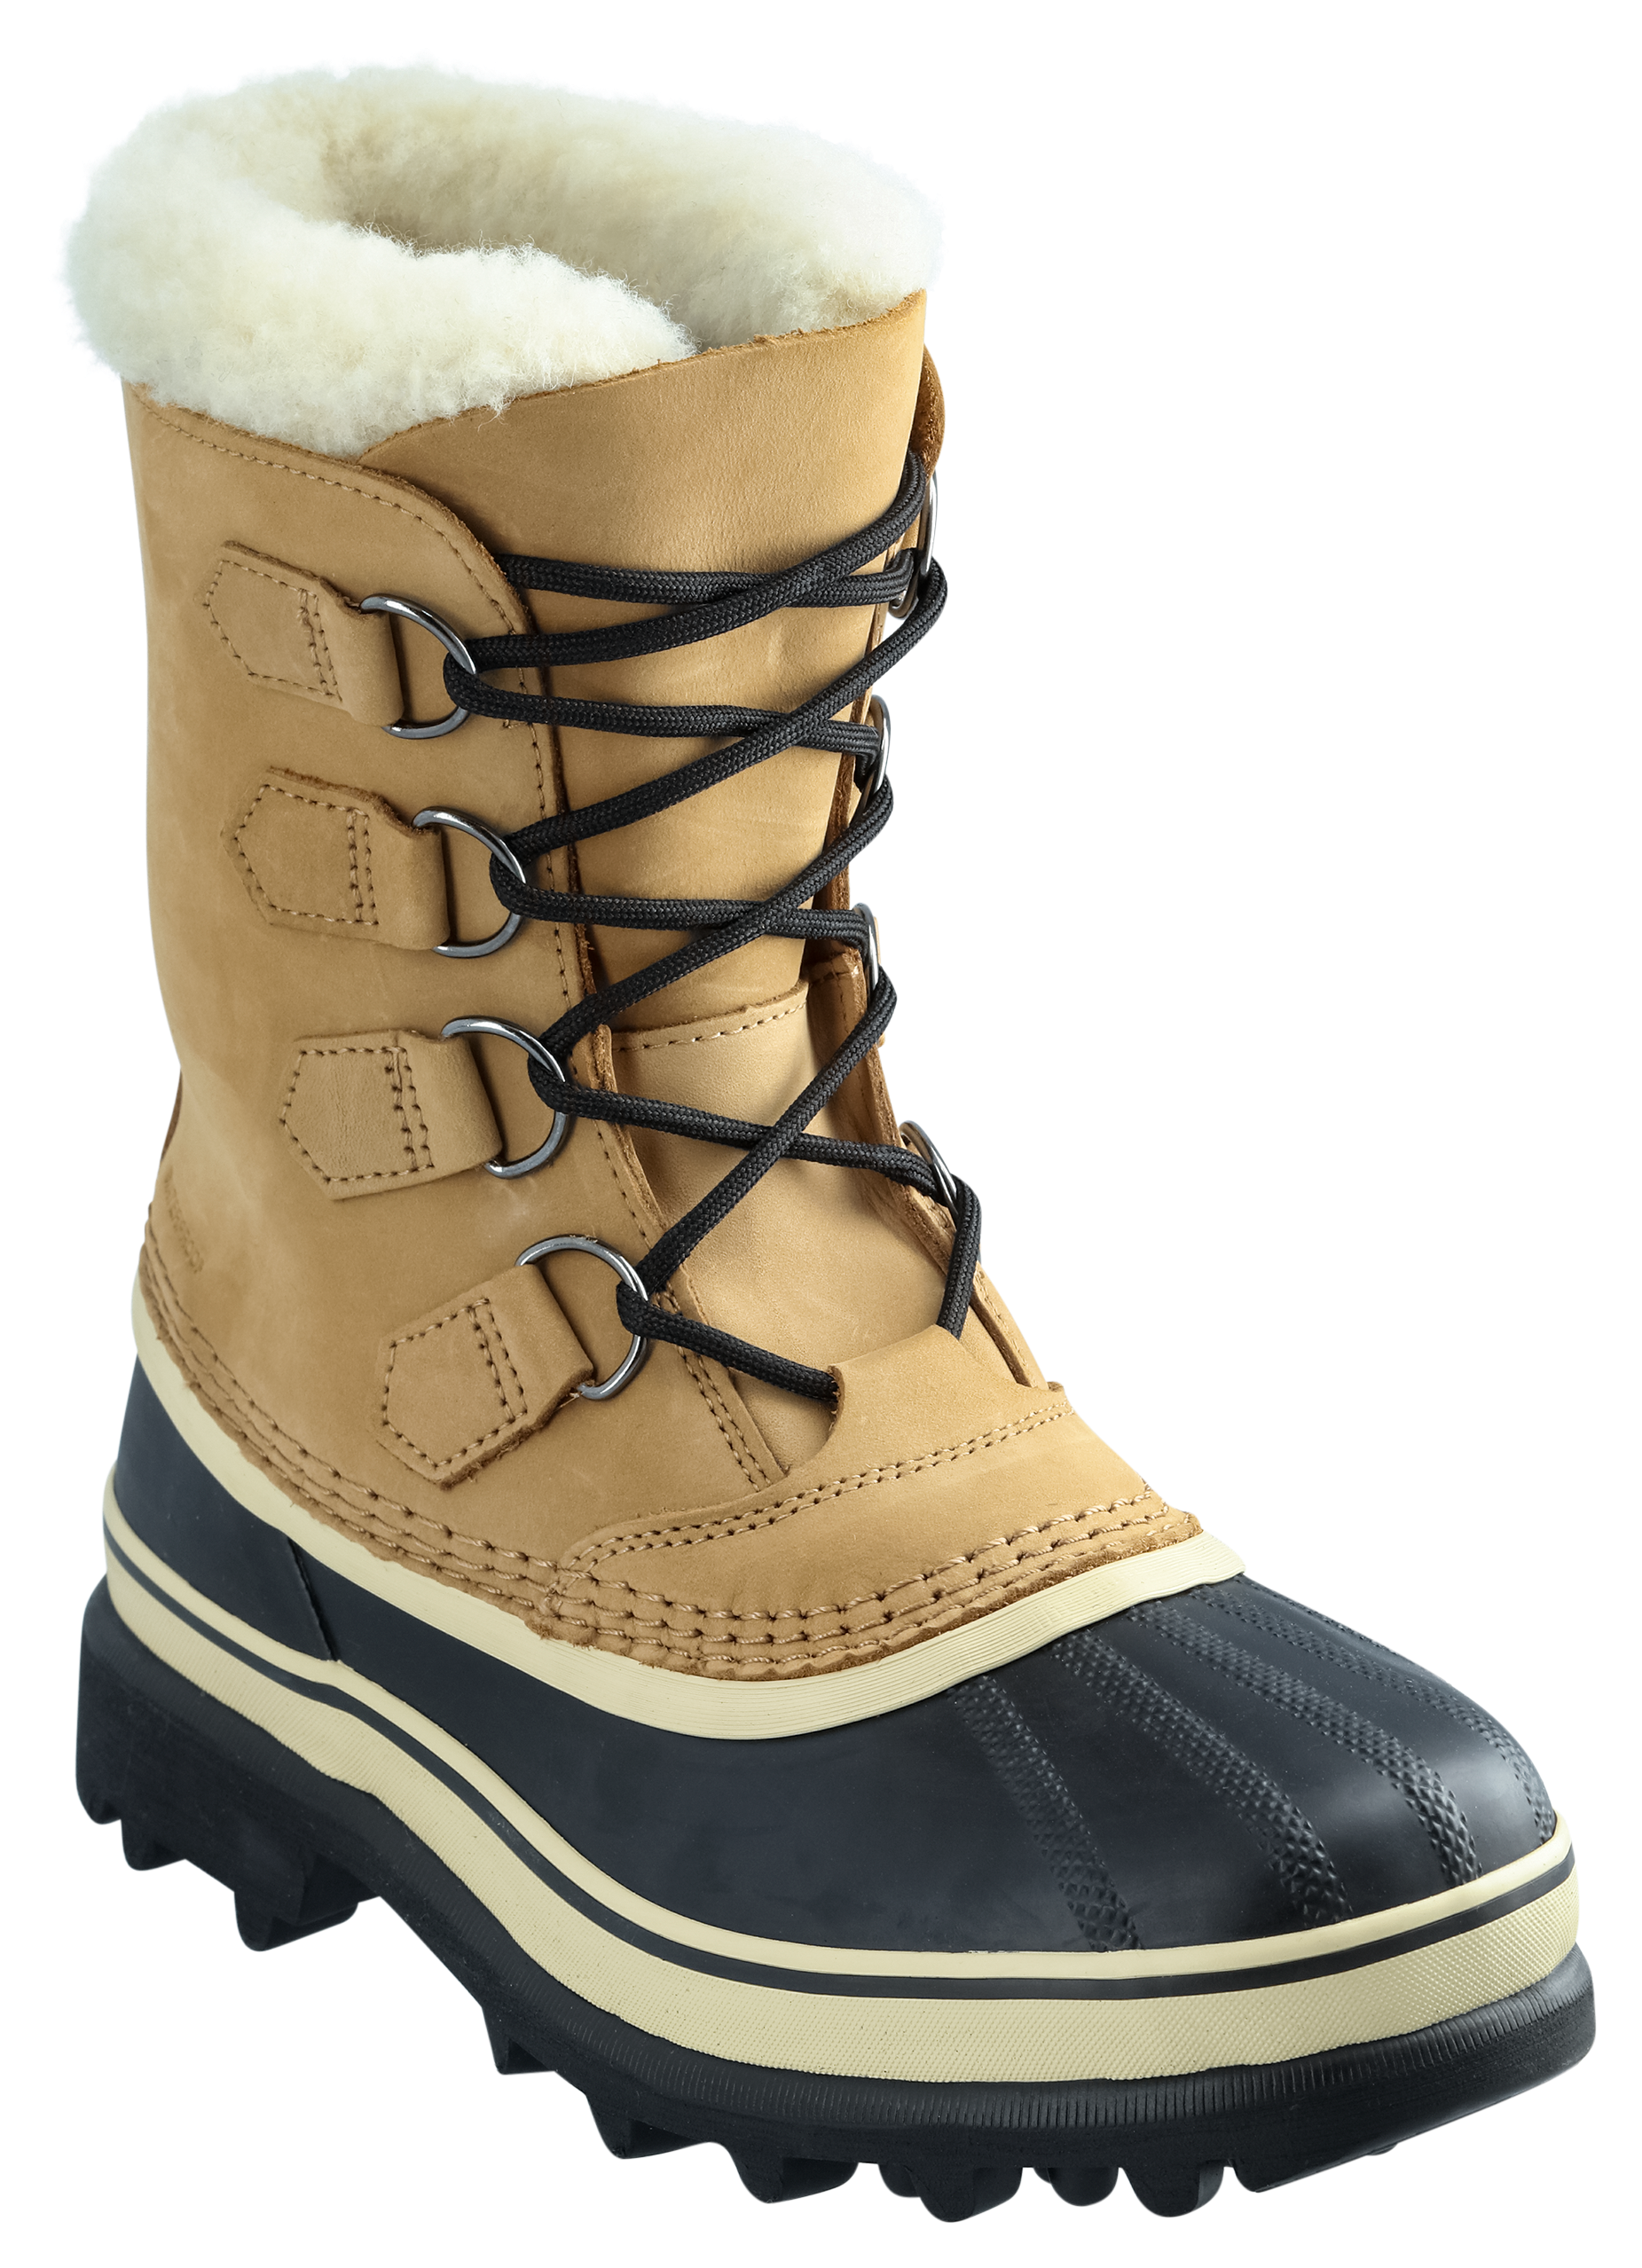 Sorel Caribou Waterproof Pac Boots for Ladies